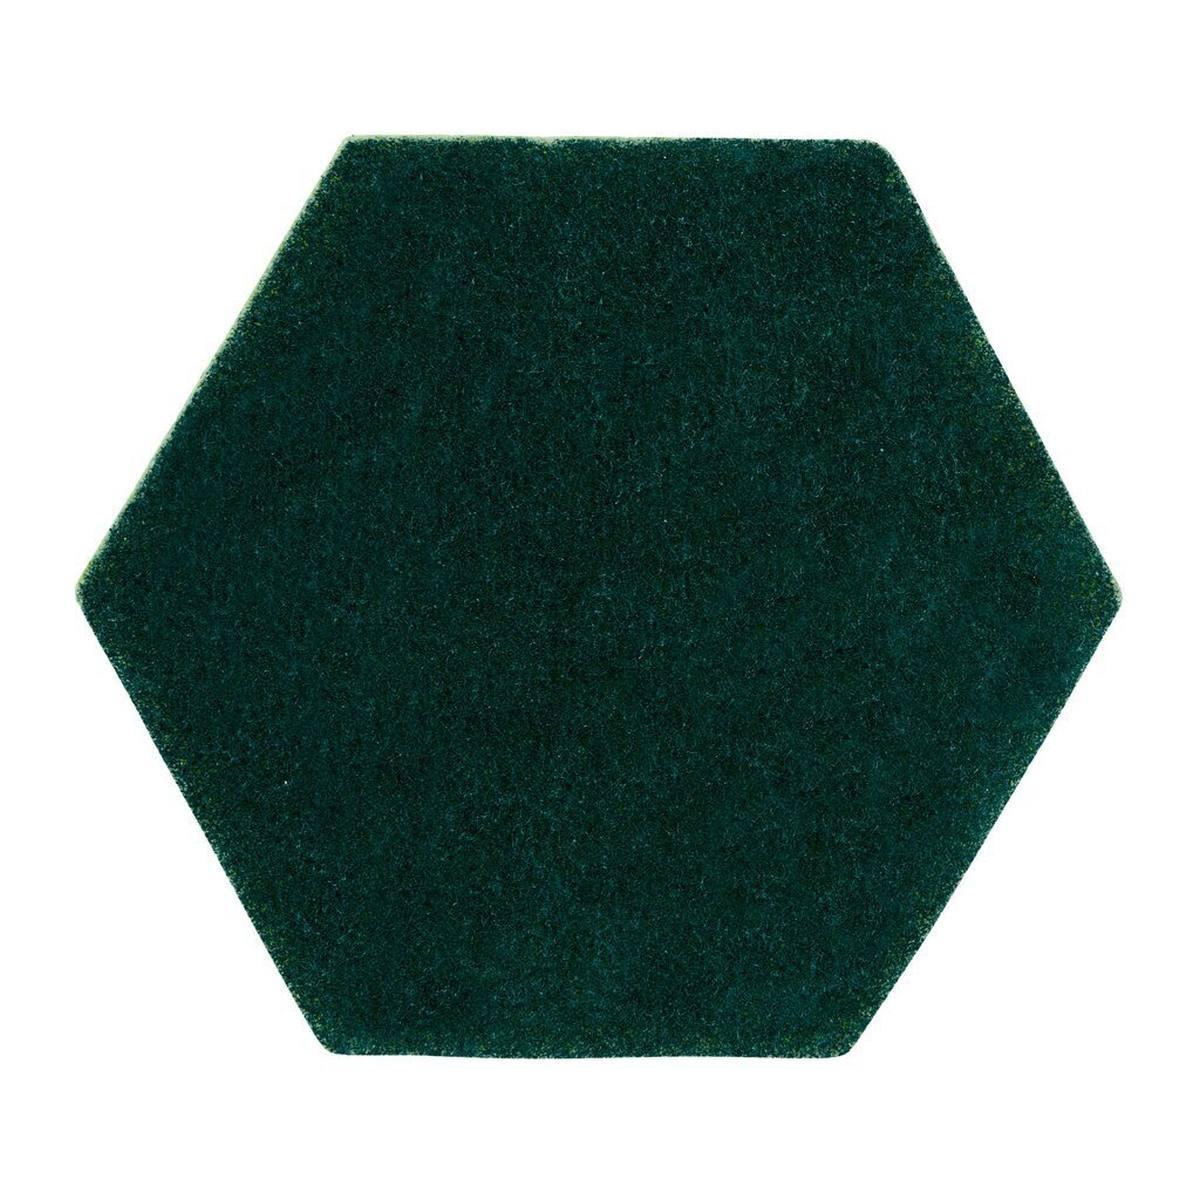 3M Scotch-Brite 2-in-1 hand pad 96HEX, green/yellow, 147 mm x 127 mm